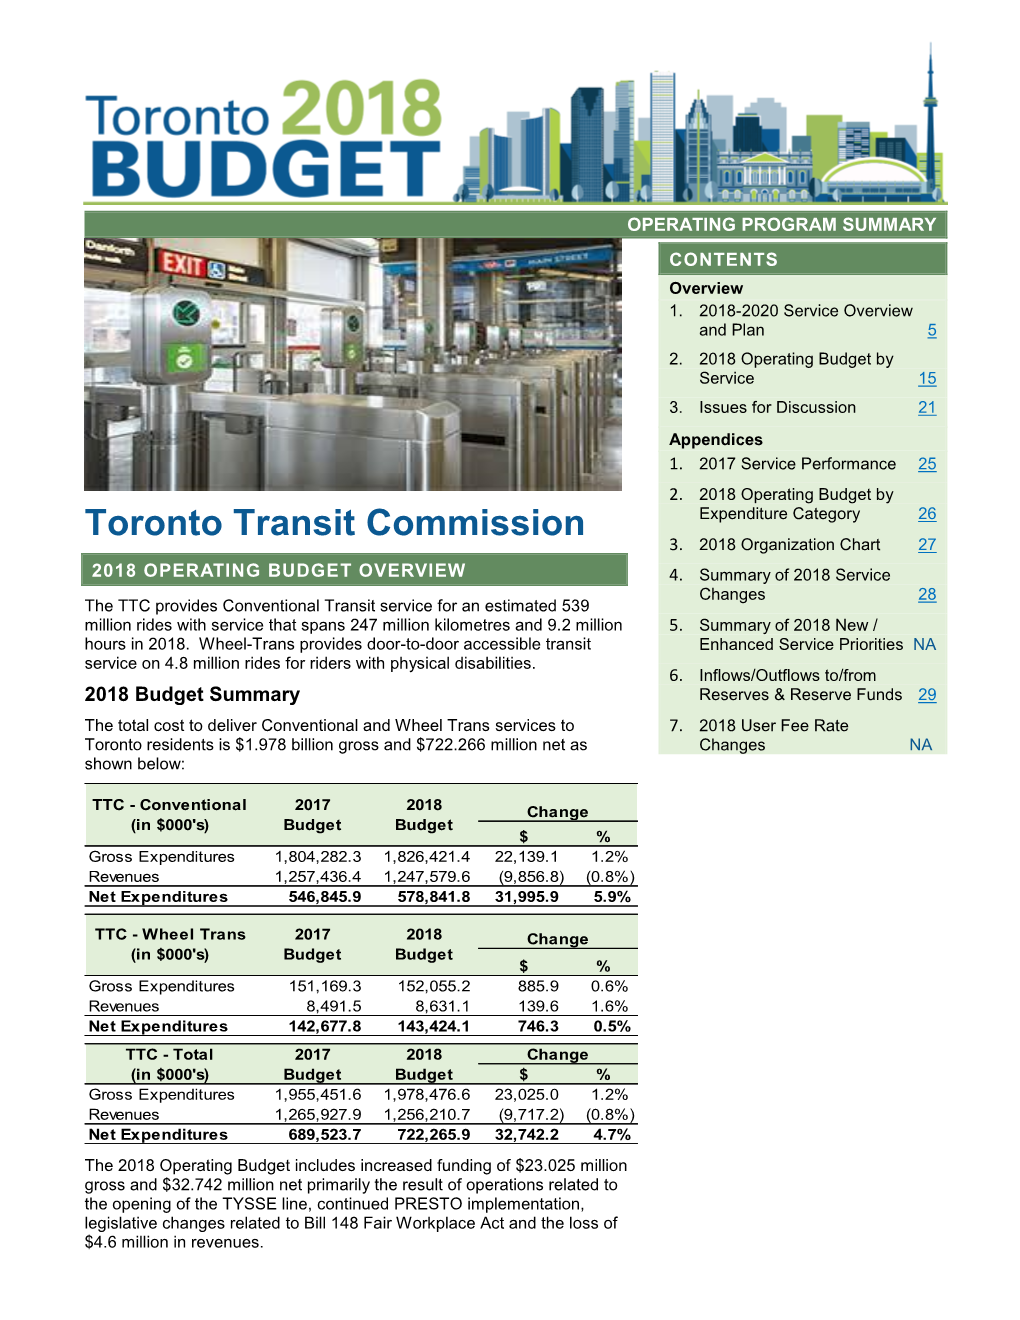 TTC's 2018 Operating Budget